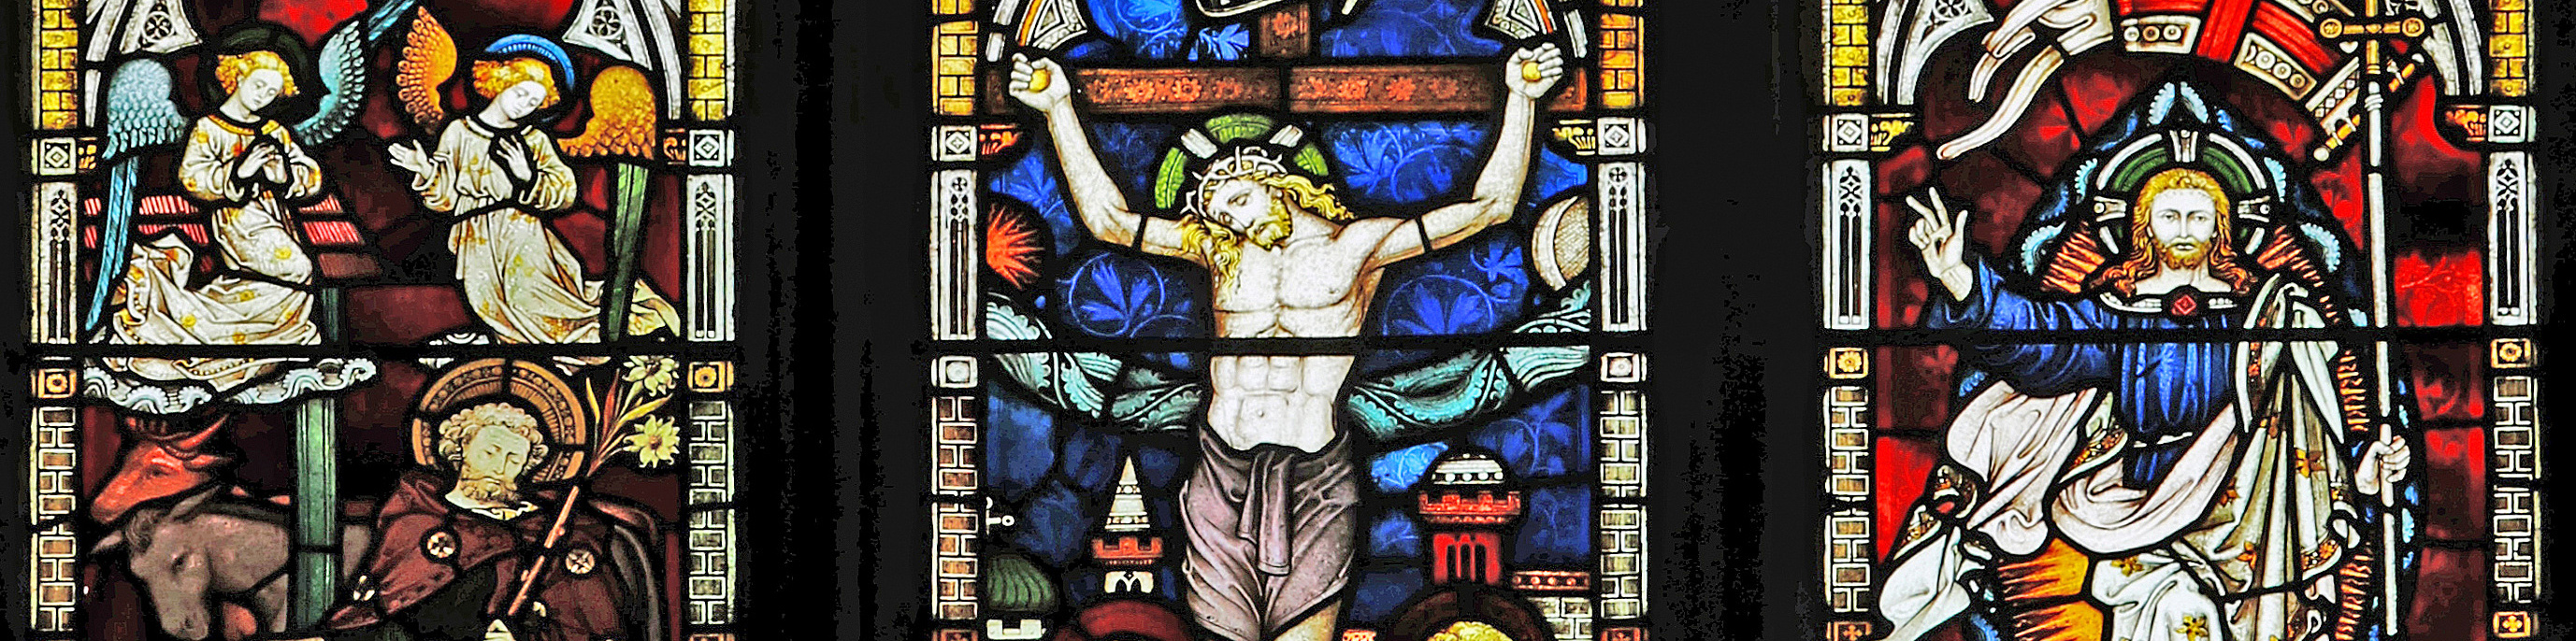 Details from East Window of All Saints Shelfanger